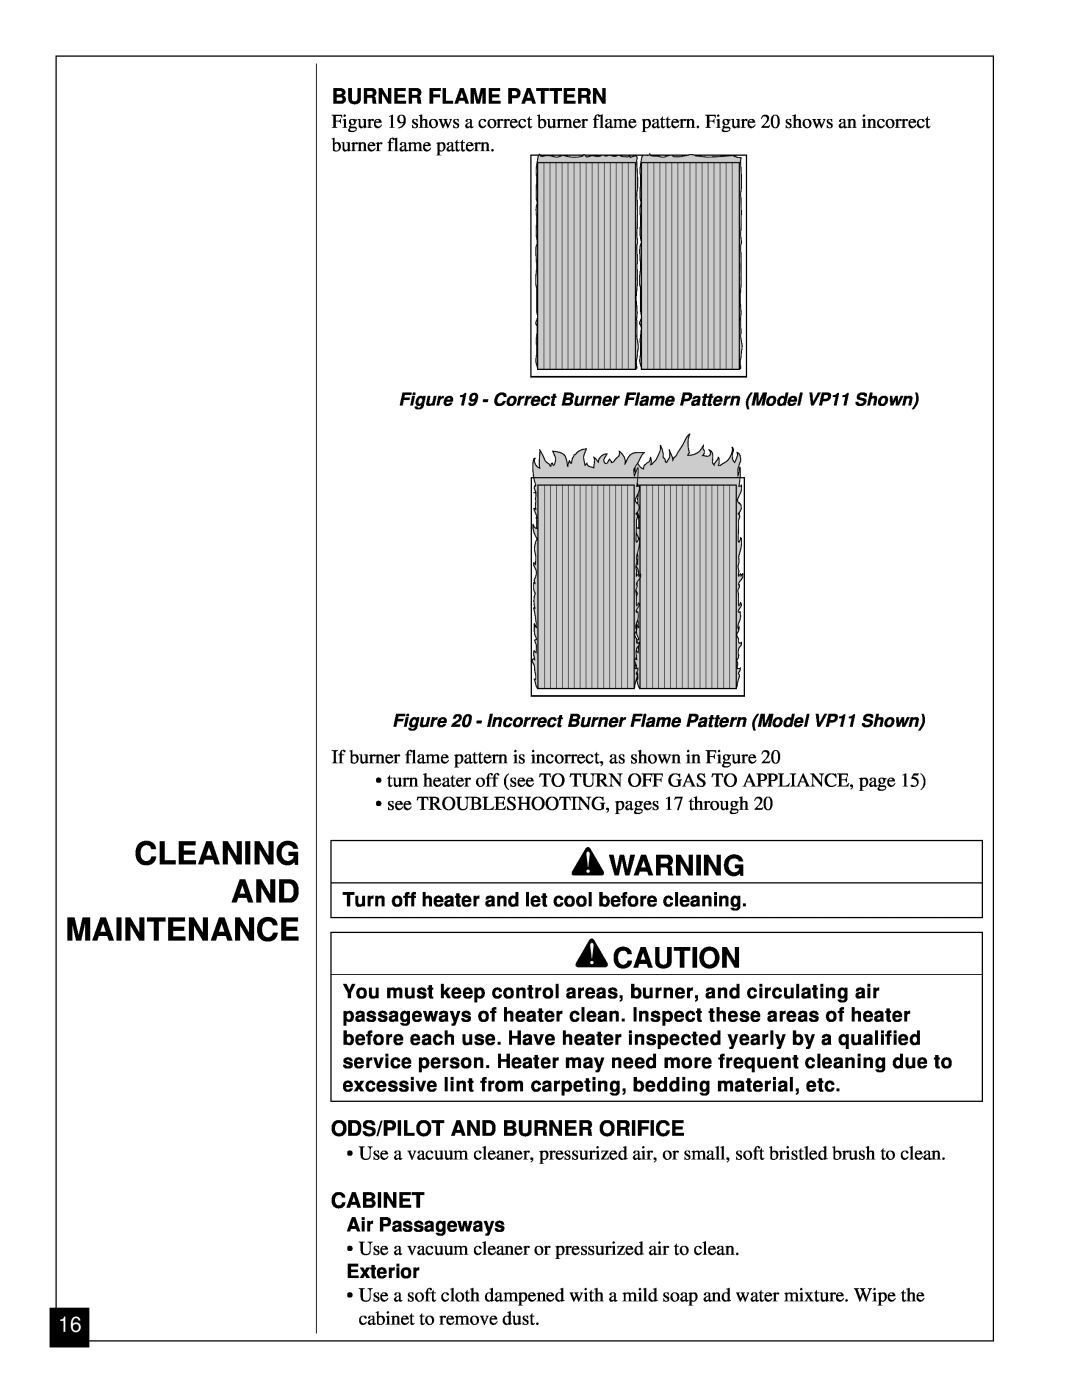 Desa VP5A, VP11 installation manual Cleaning And Maintenance, Burner Flame Pattern, Ods/Pilot And Burner Orifice, Cabinet 